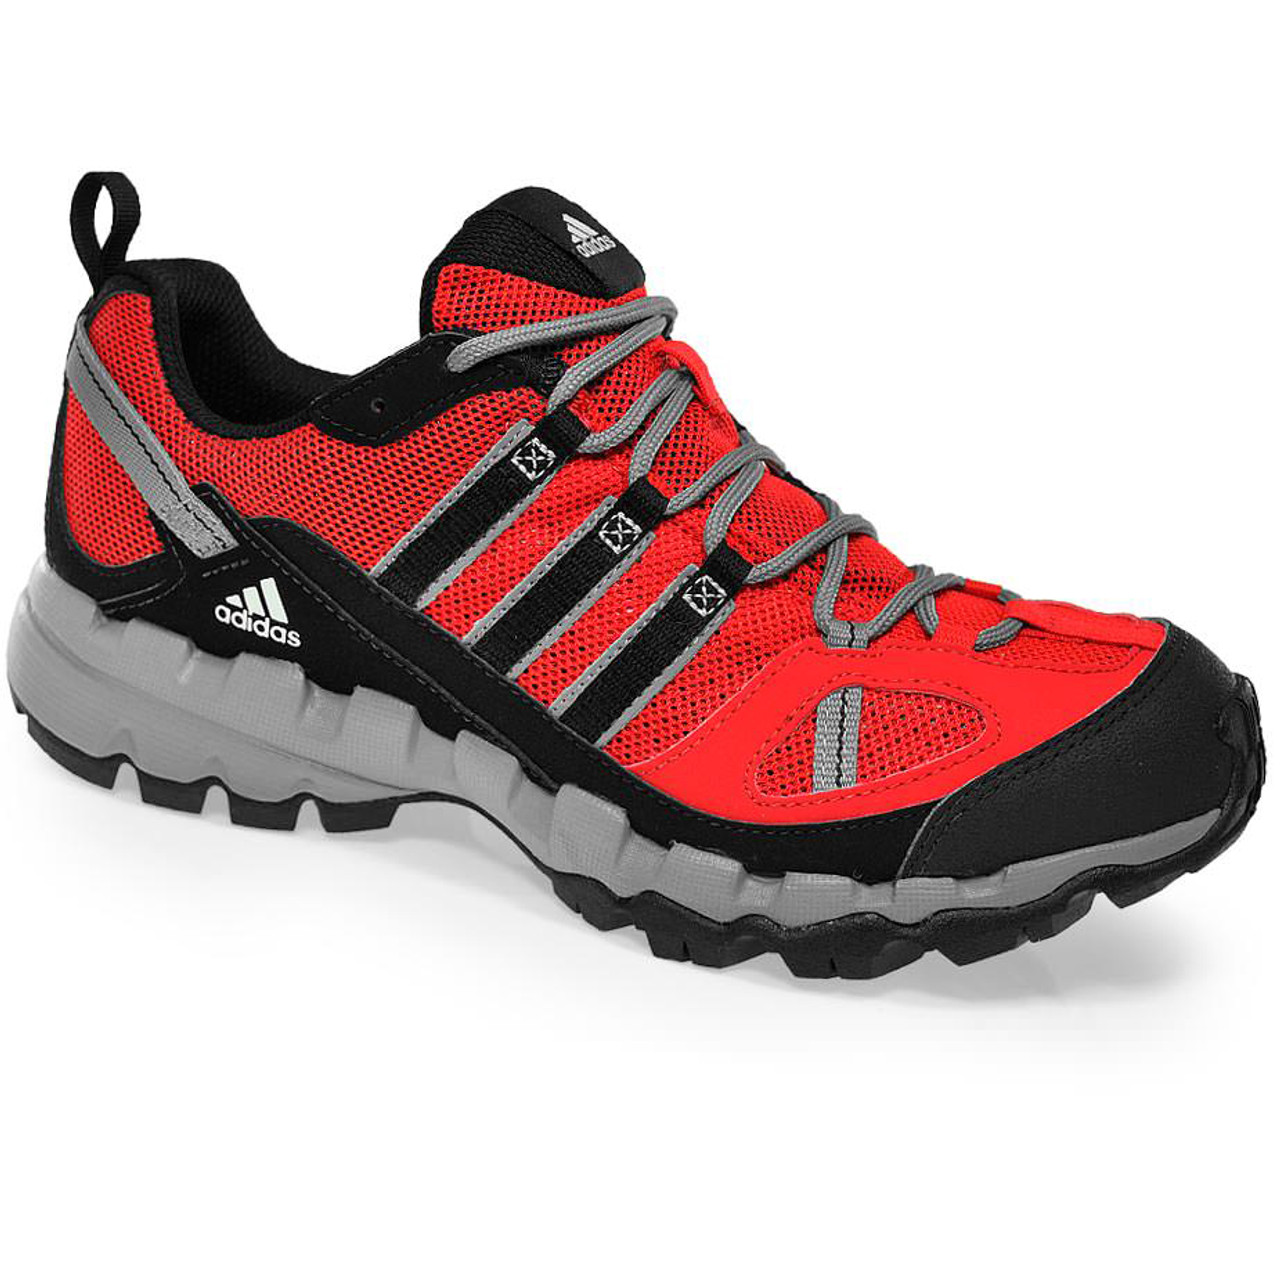 Adidas 2006 Neptune XC Cross Country Running Shoe Red/Black 464710 Men Sz  12.5 M